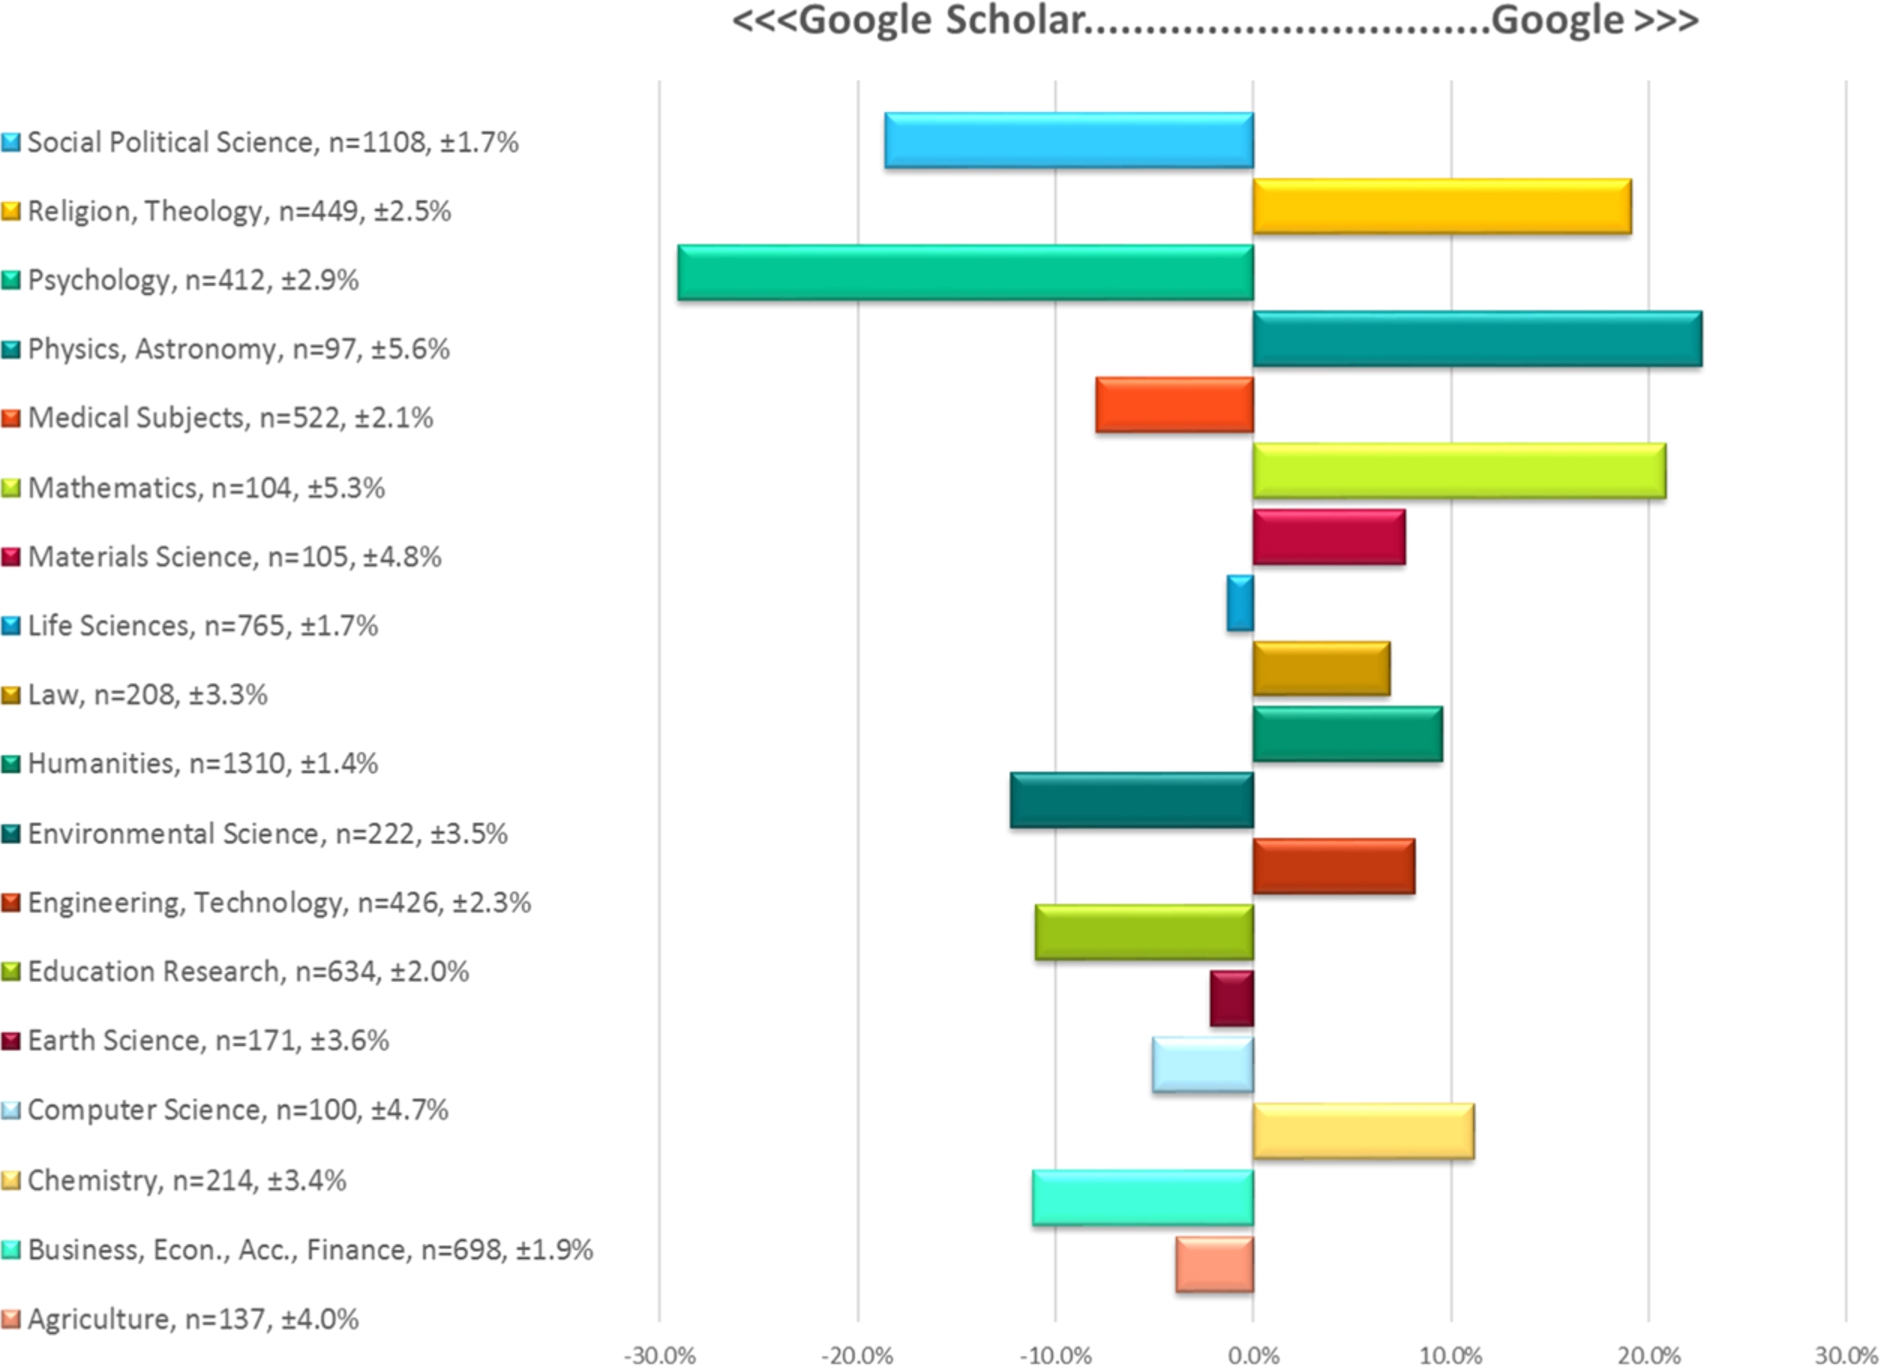 Google vs. Google Scholar by subject, 2015.